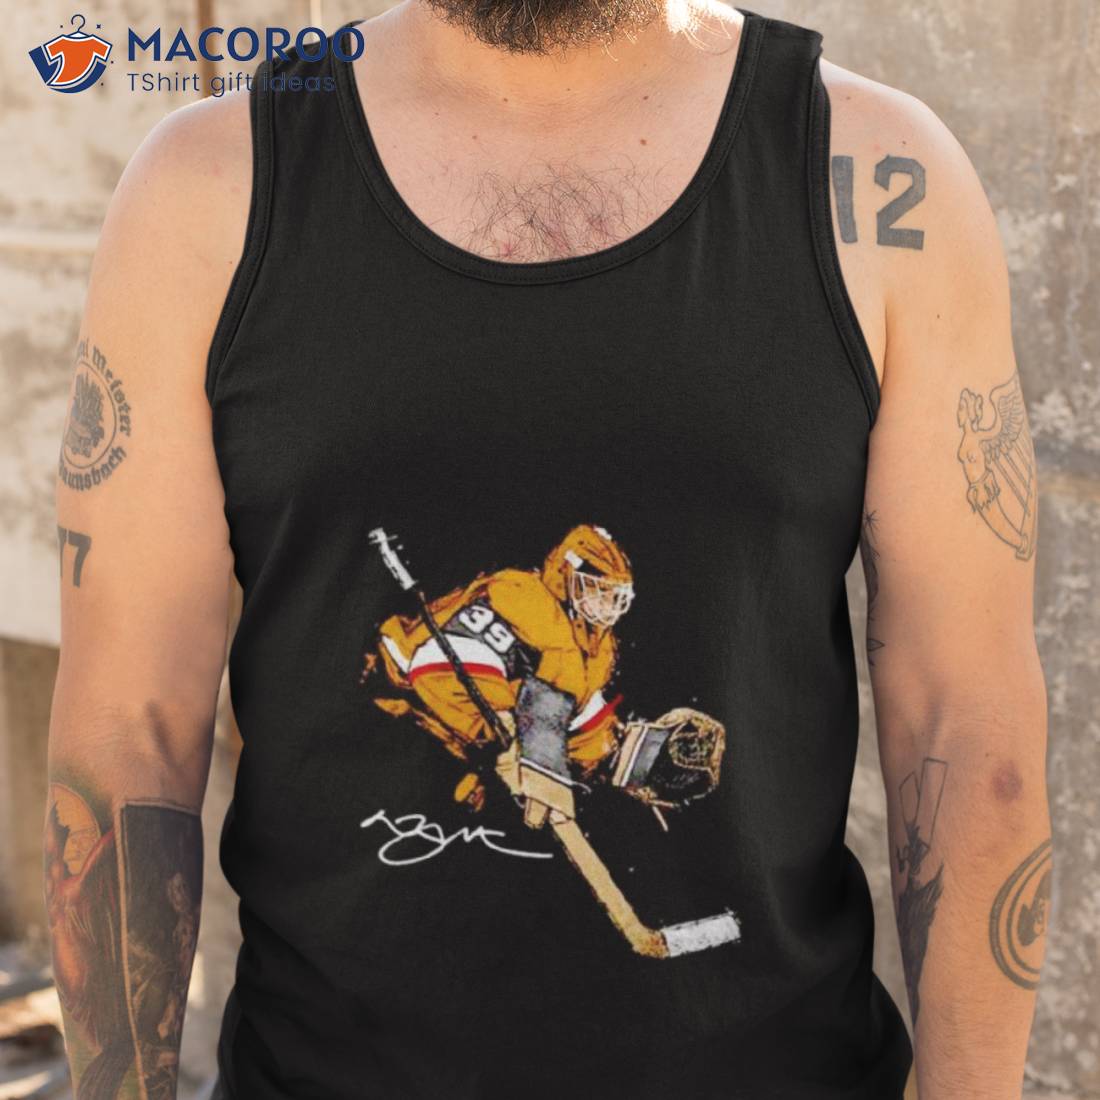 Official Laurent Brossoit Vegas Hockey Signature Illustration Shirt